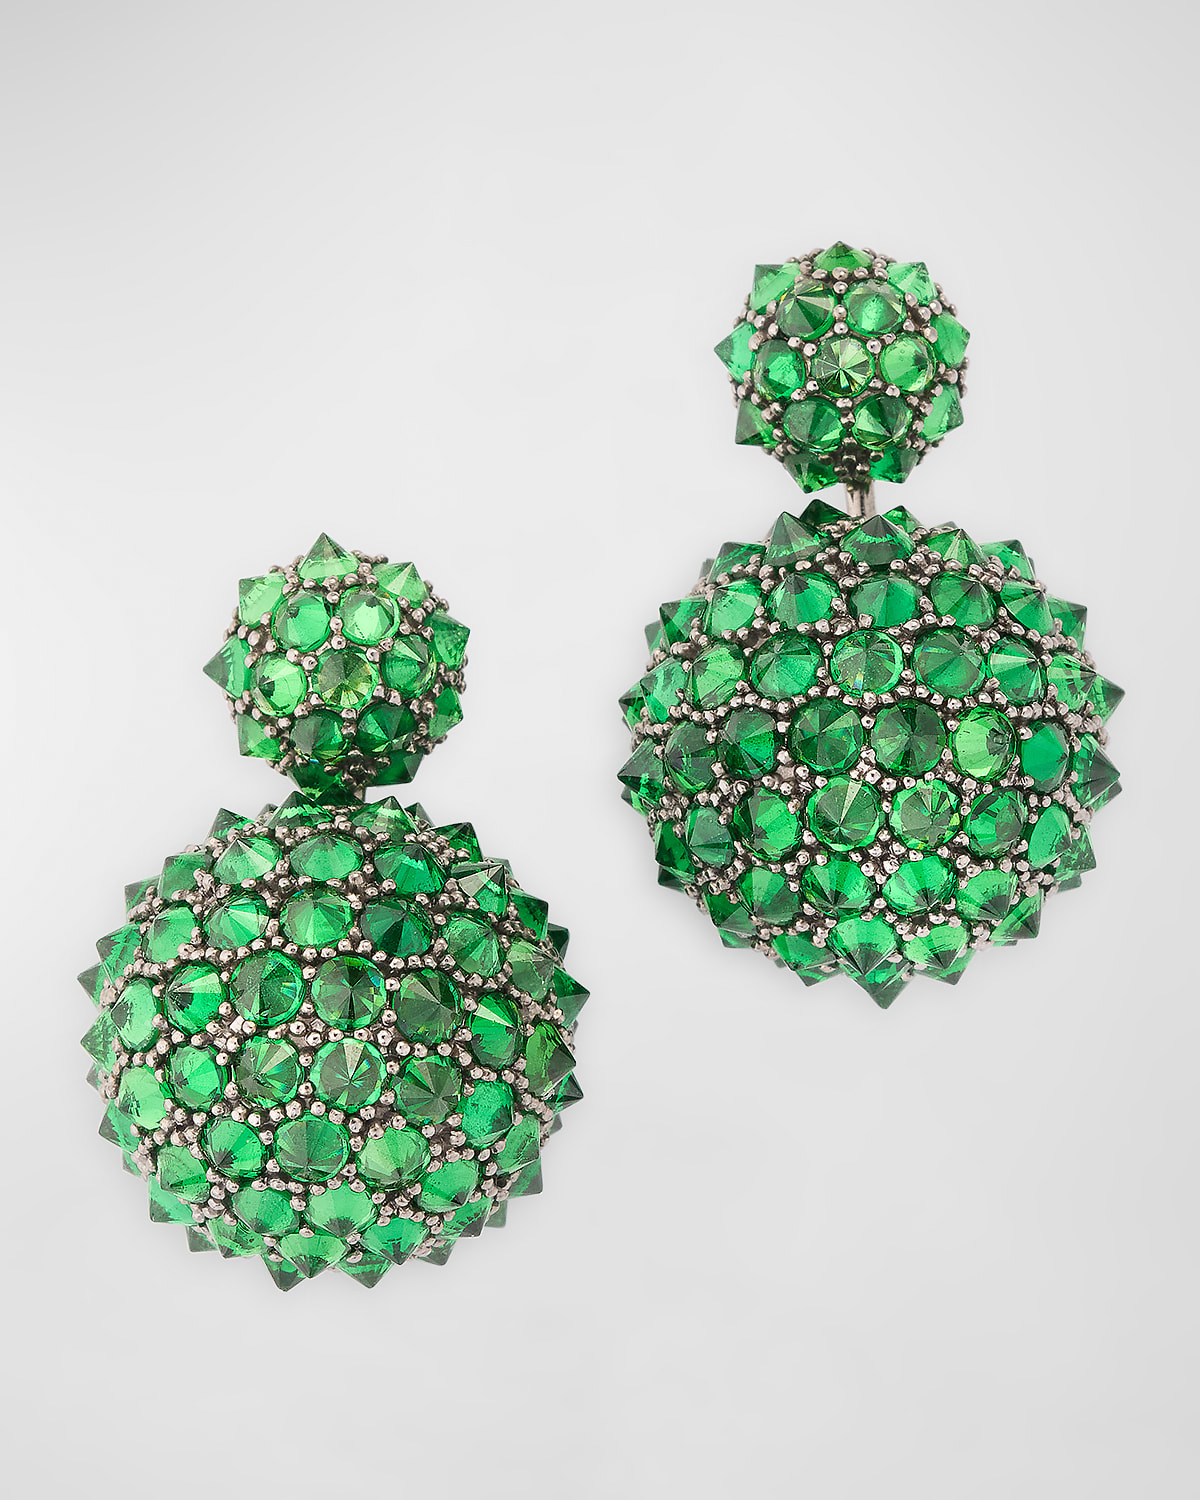 Limited Edition Double Ball Drop Green Tsavorite Earrings in 18K White Gold